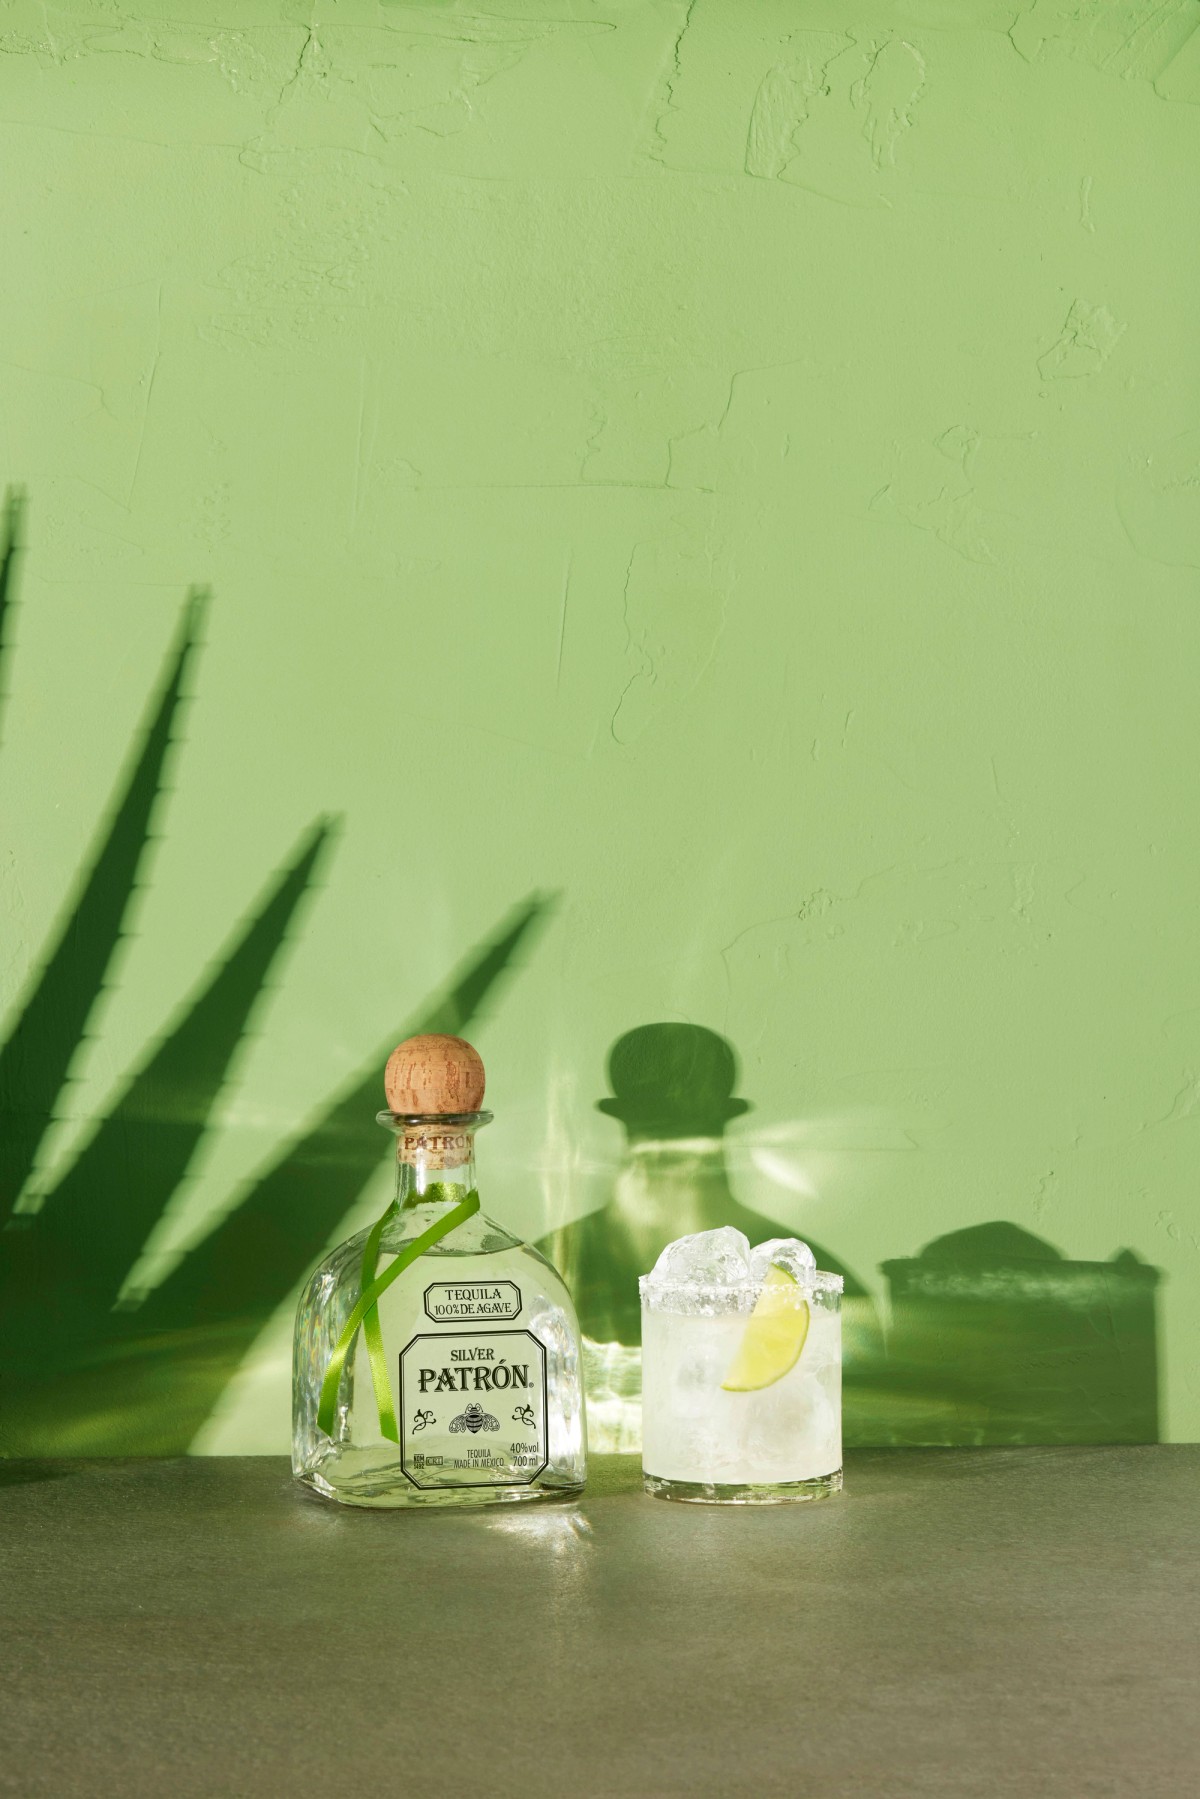 Patron Margarita and bottle photography by award winning Drinks Photographer Jason Bailey Studio London